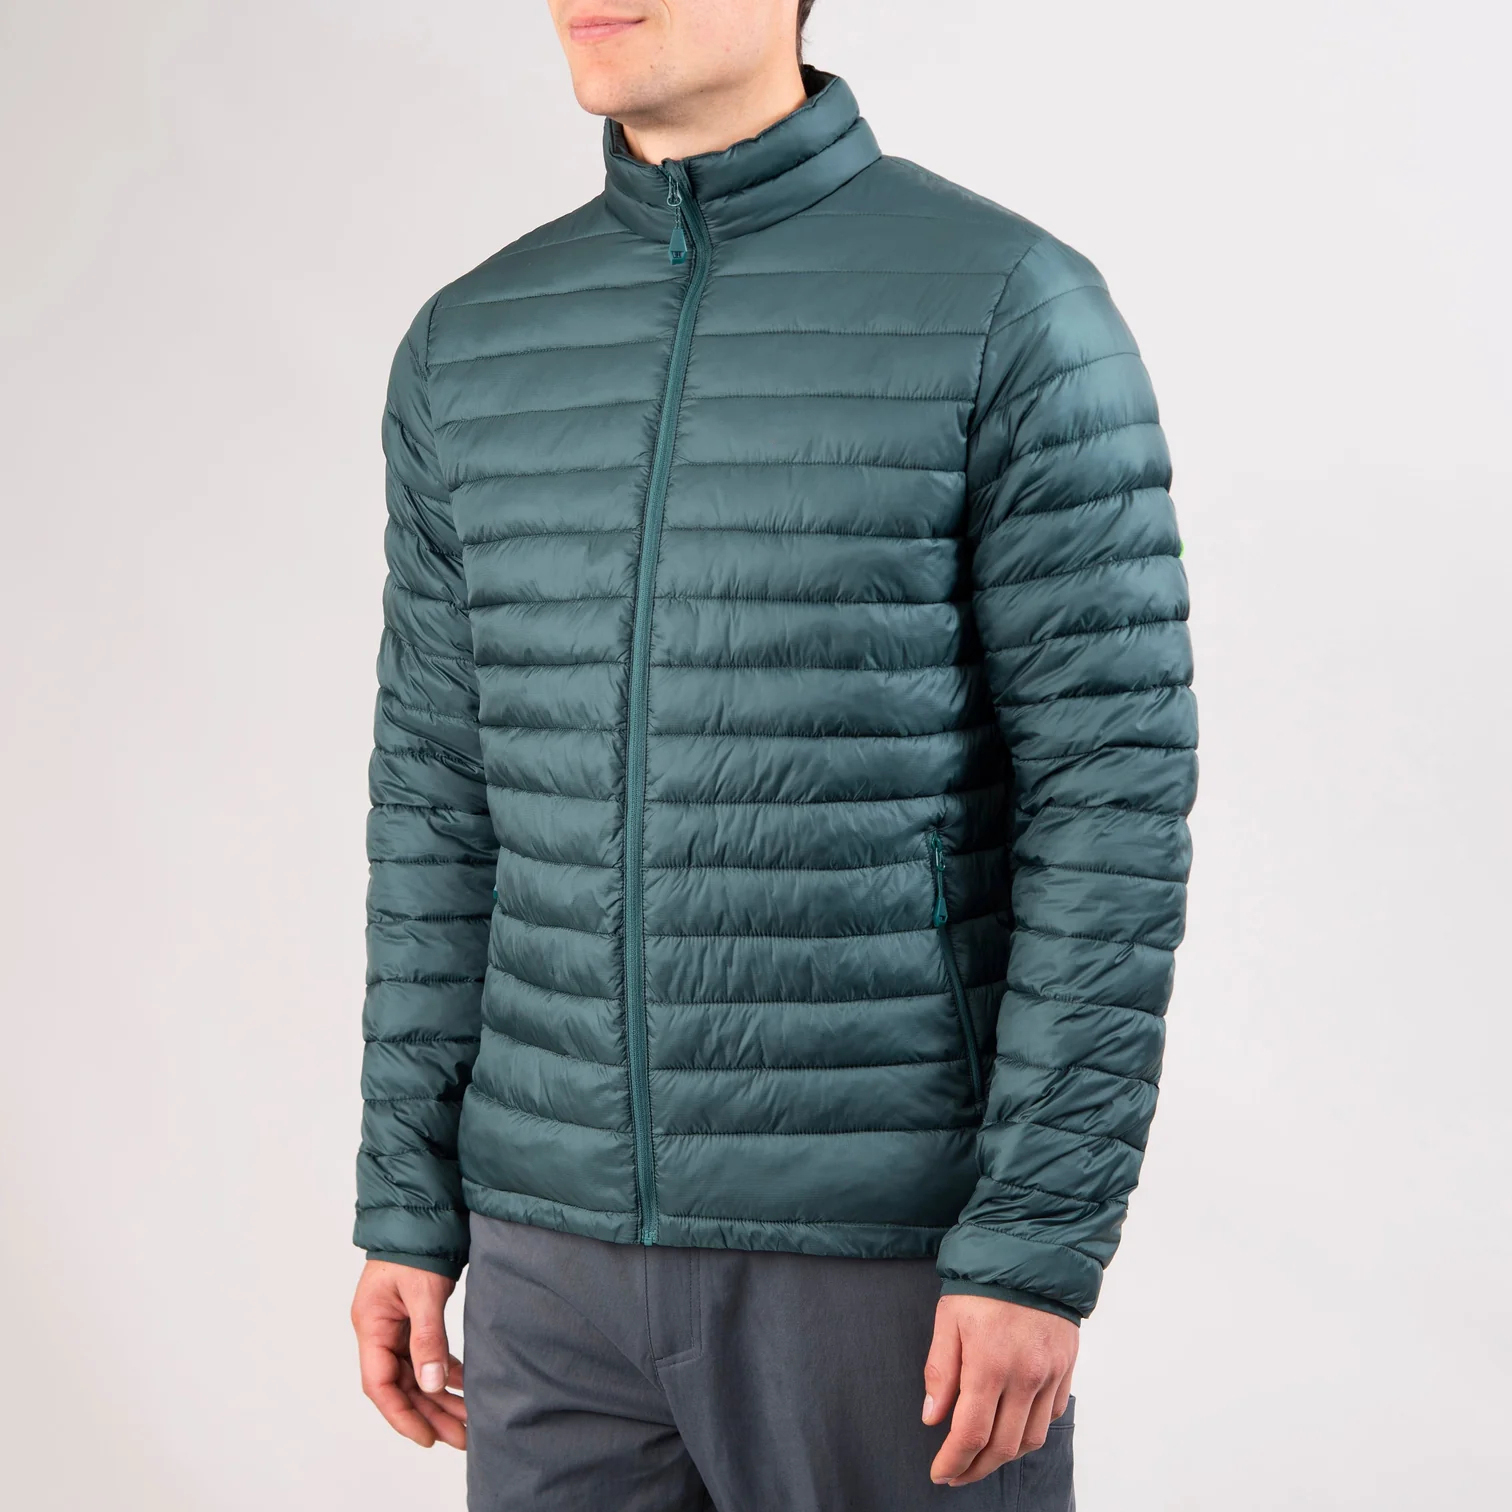 Hot Selling Men’s Lightweight insulation jacket with zipper